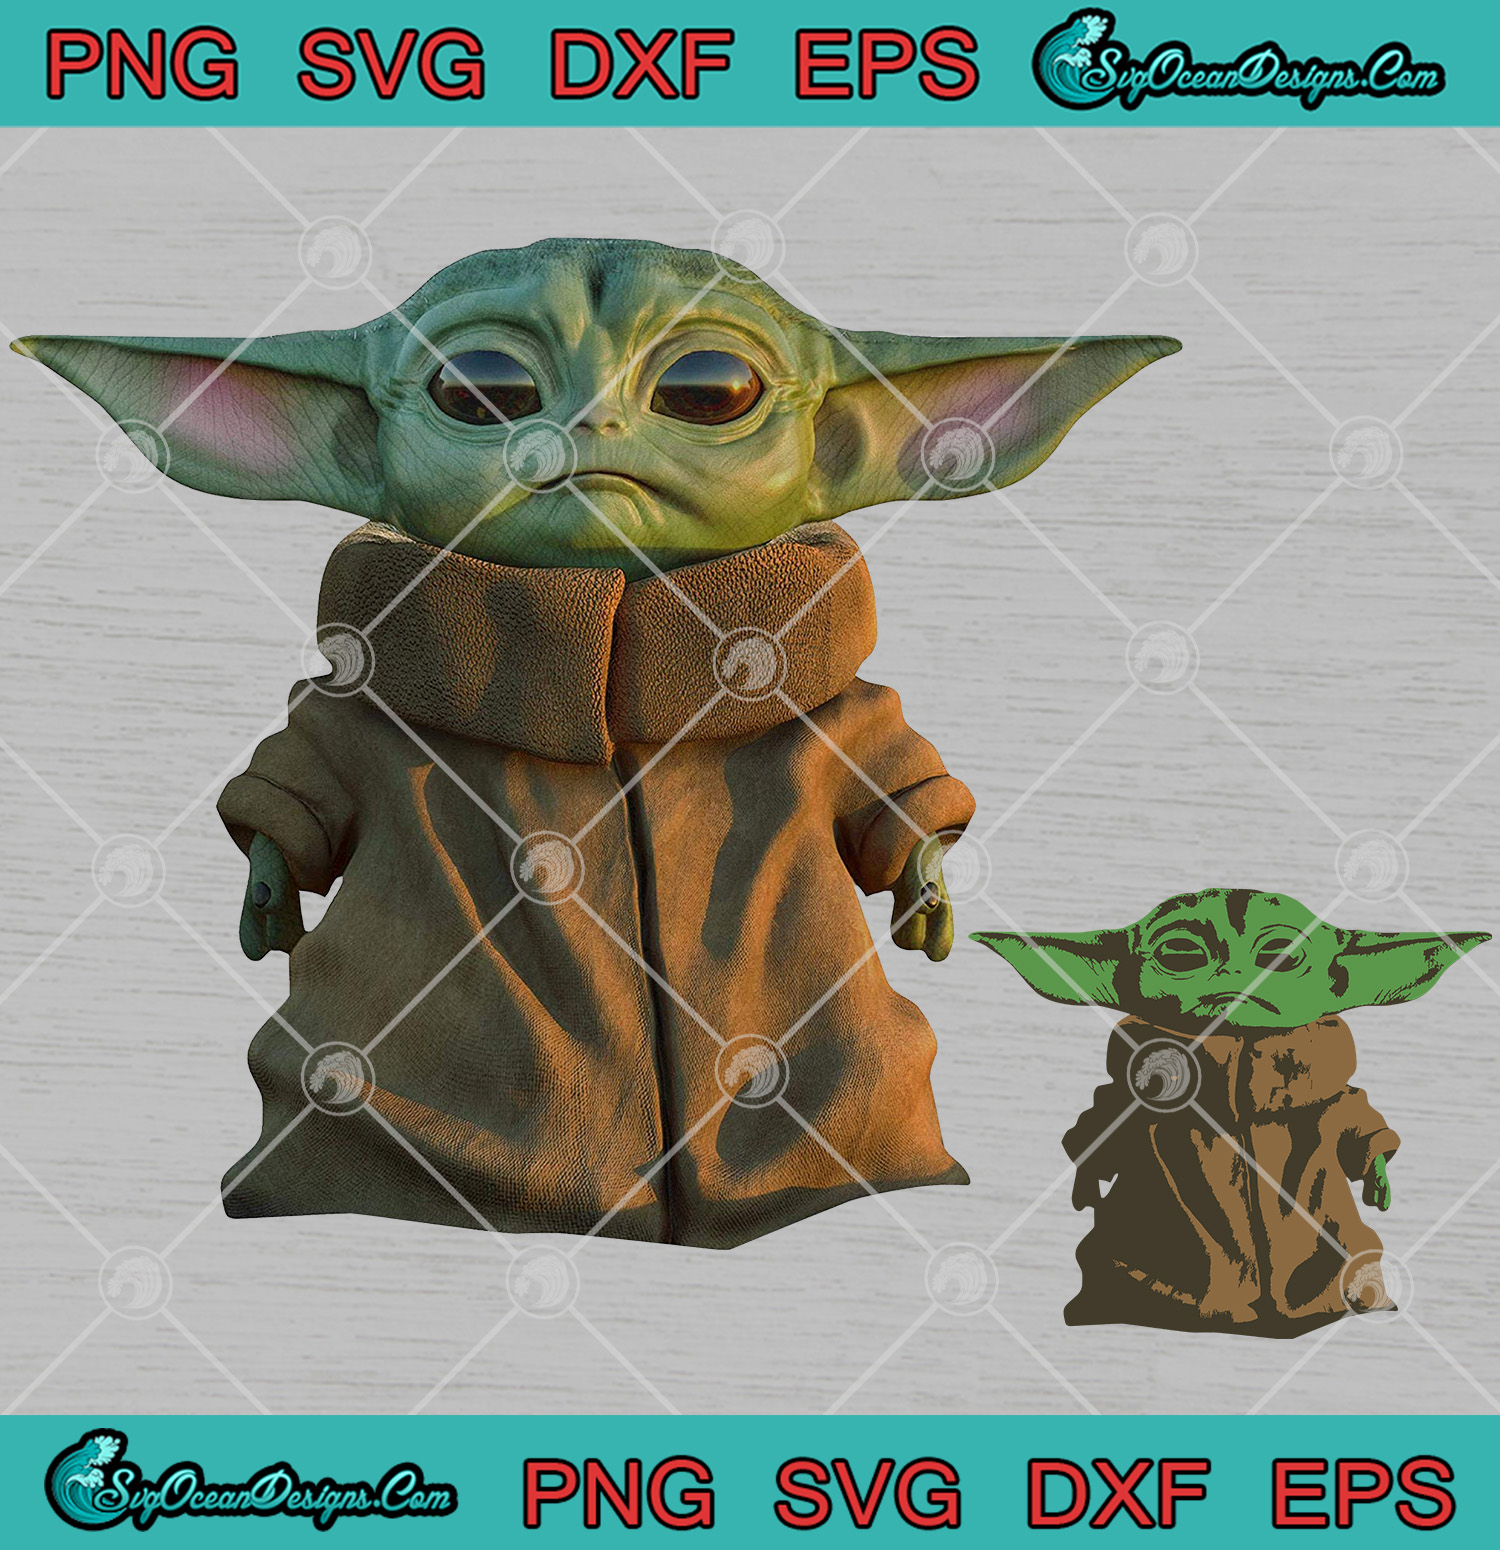 Cute Baby Yoda Star Wars Mandalorian Digital Image .PNG File 